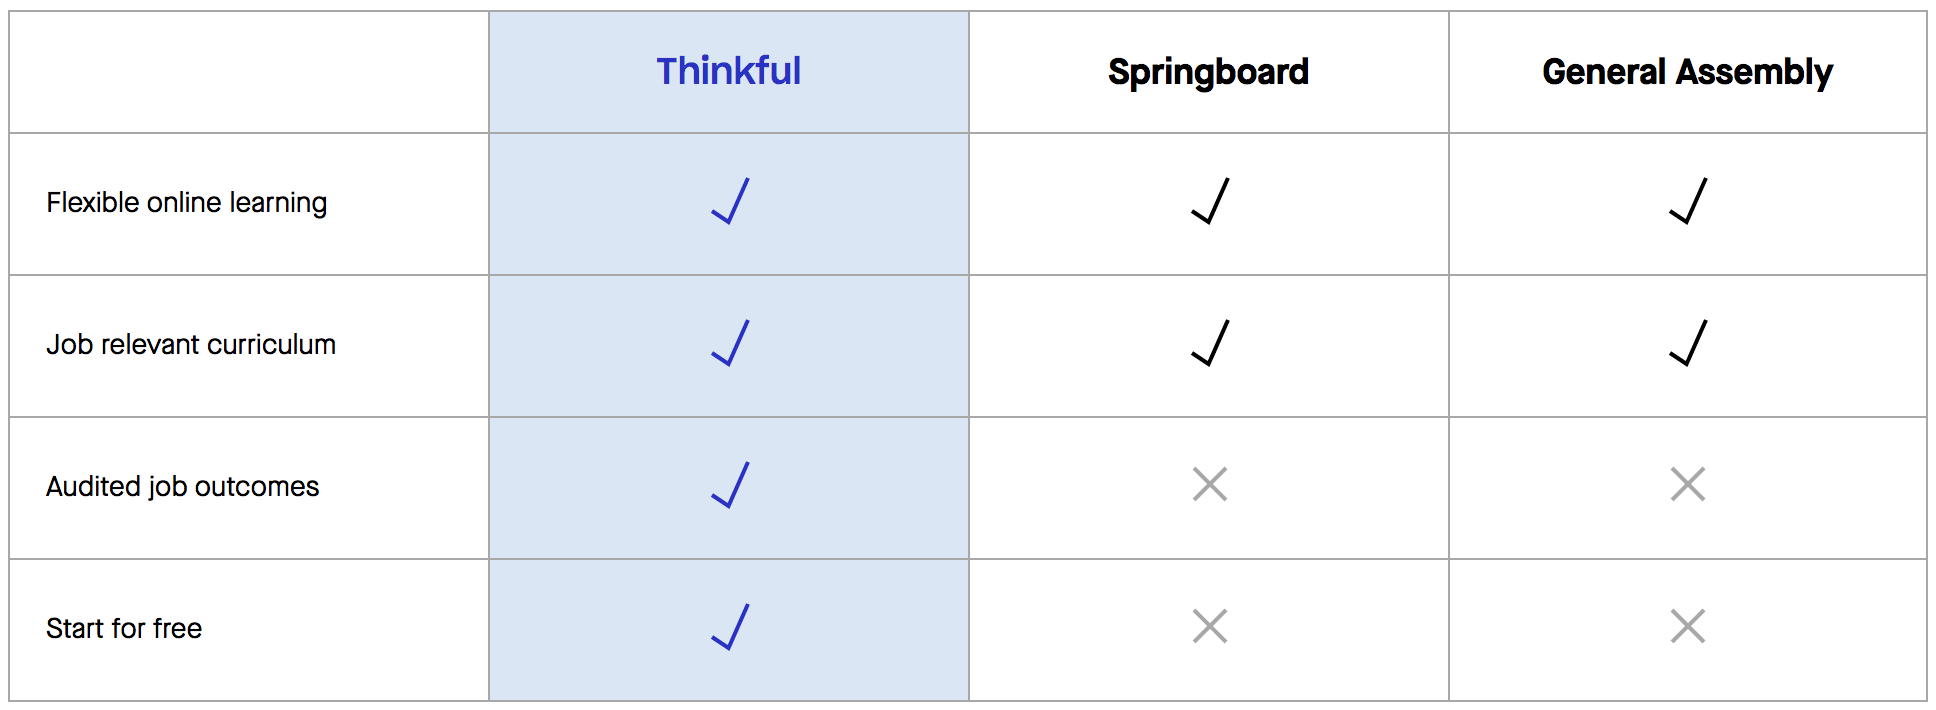 thinkful-vs-springboard-general-assembly